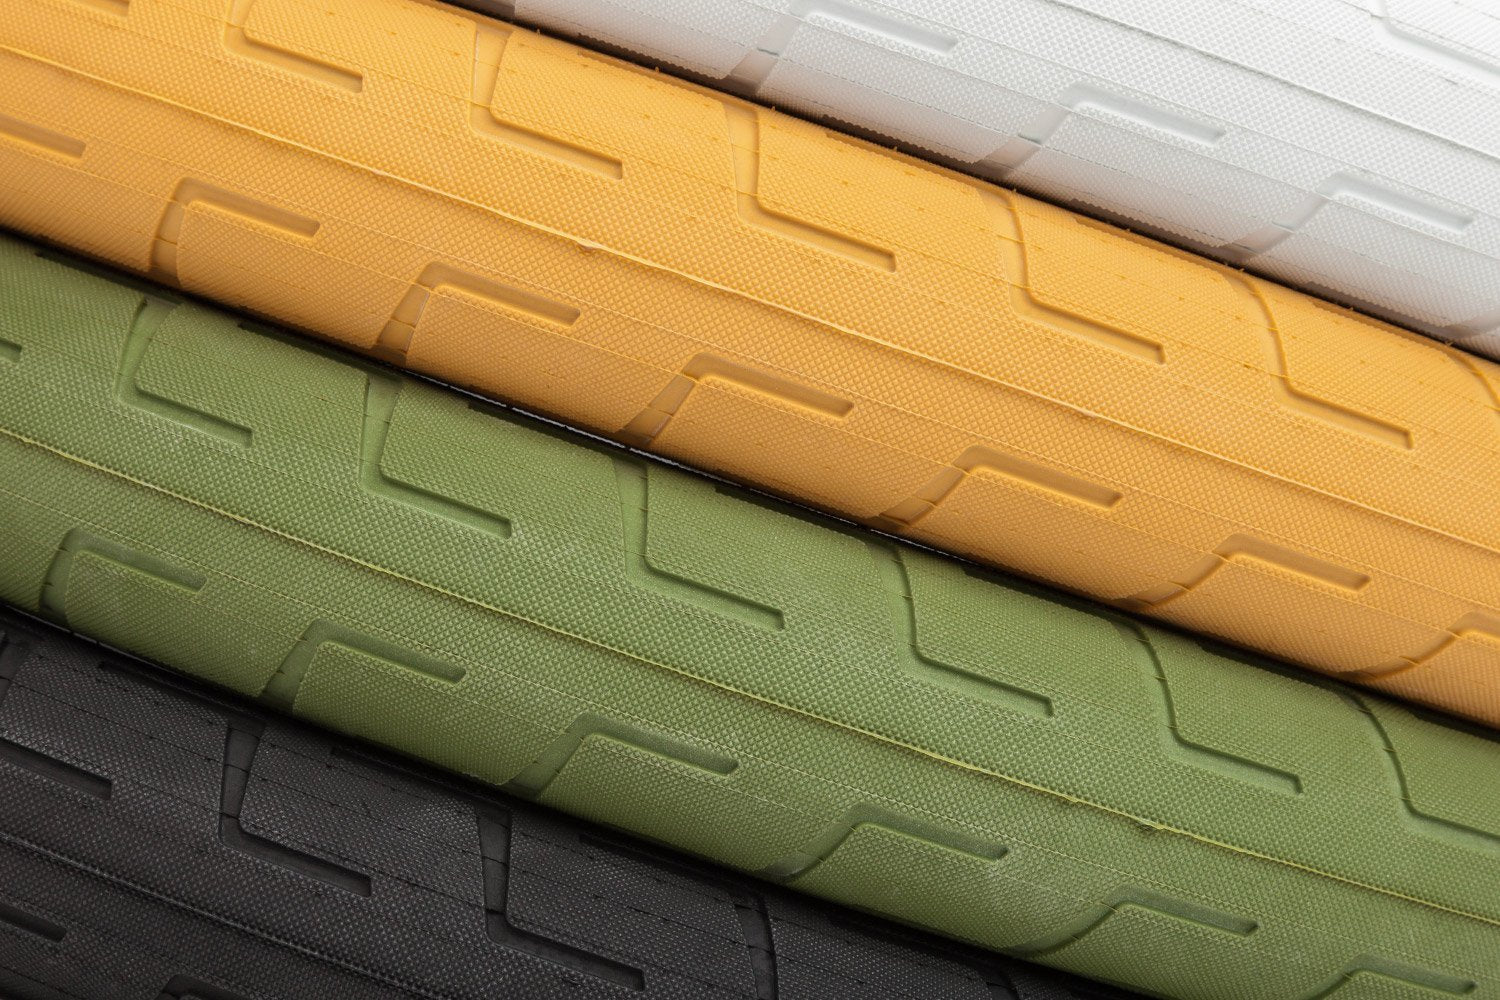 BSD Donnastreet Tire (Various Colors)